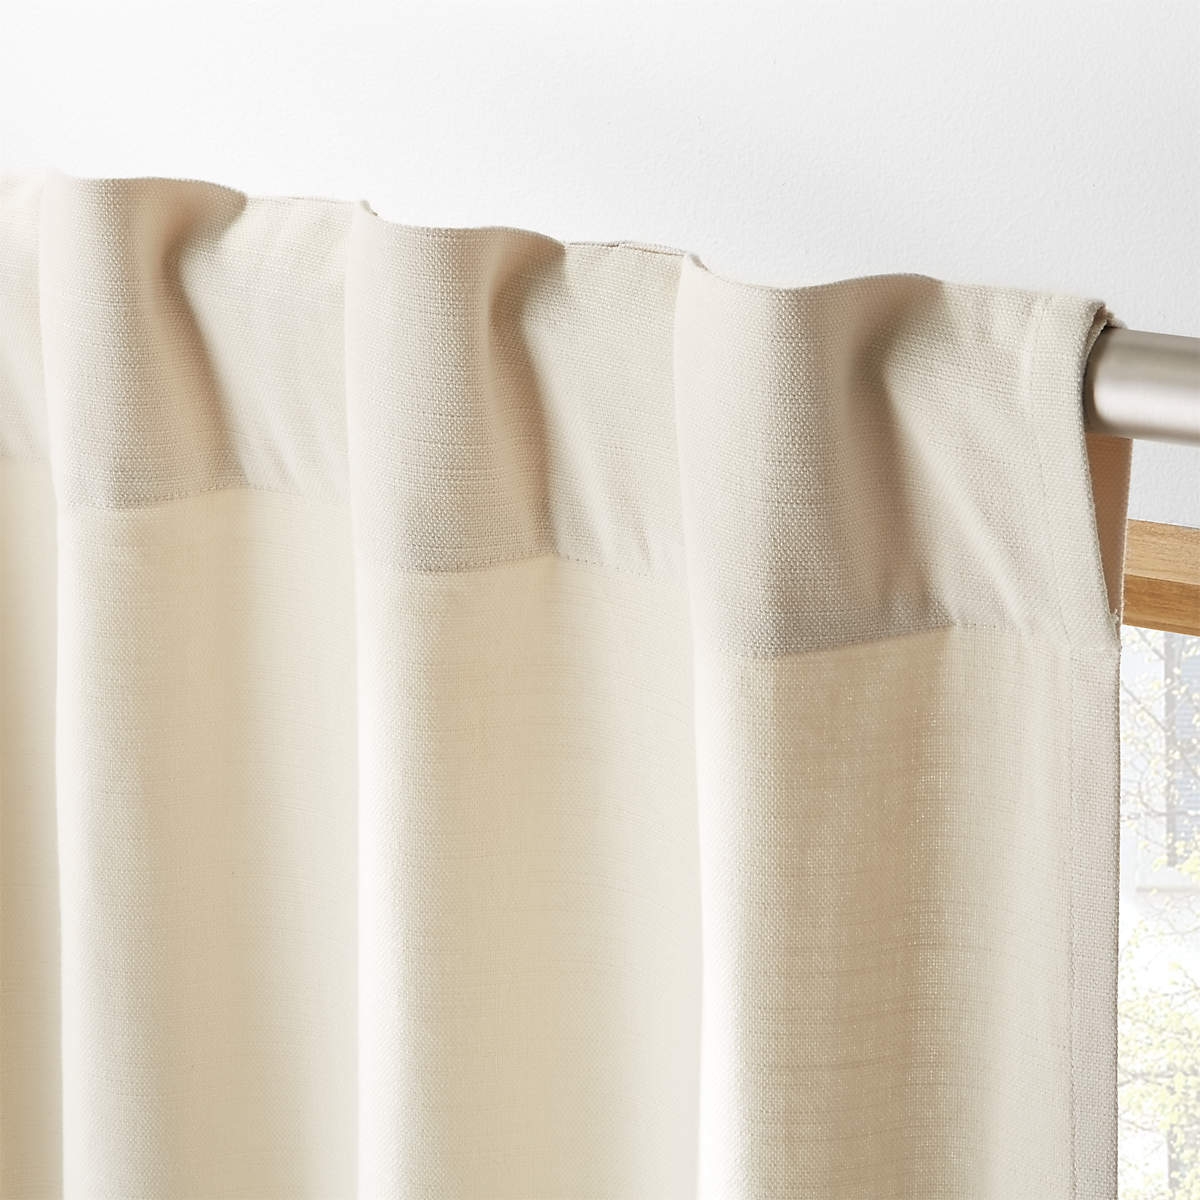 Natural Tan Cotton Basketweave Window Curtain Panel 48"x96" - Image 2